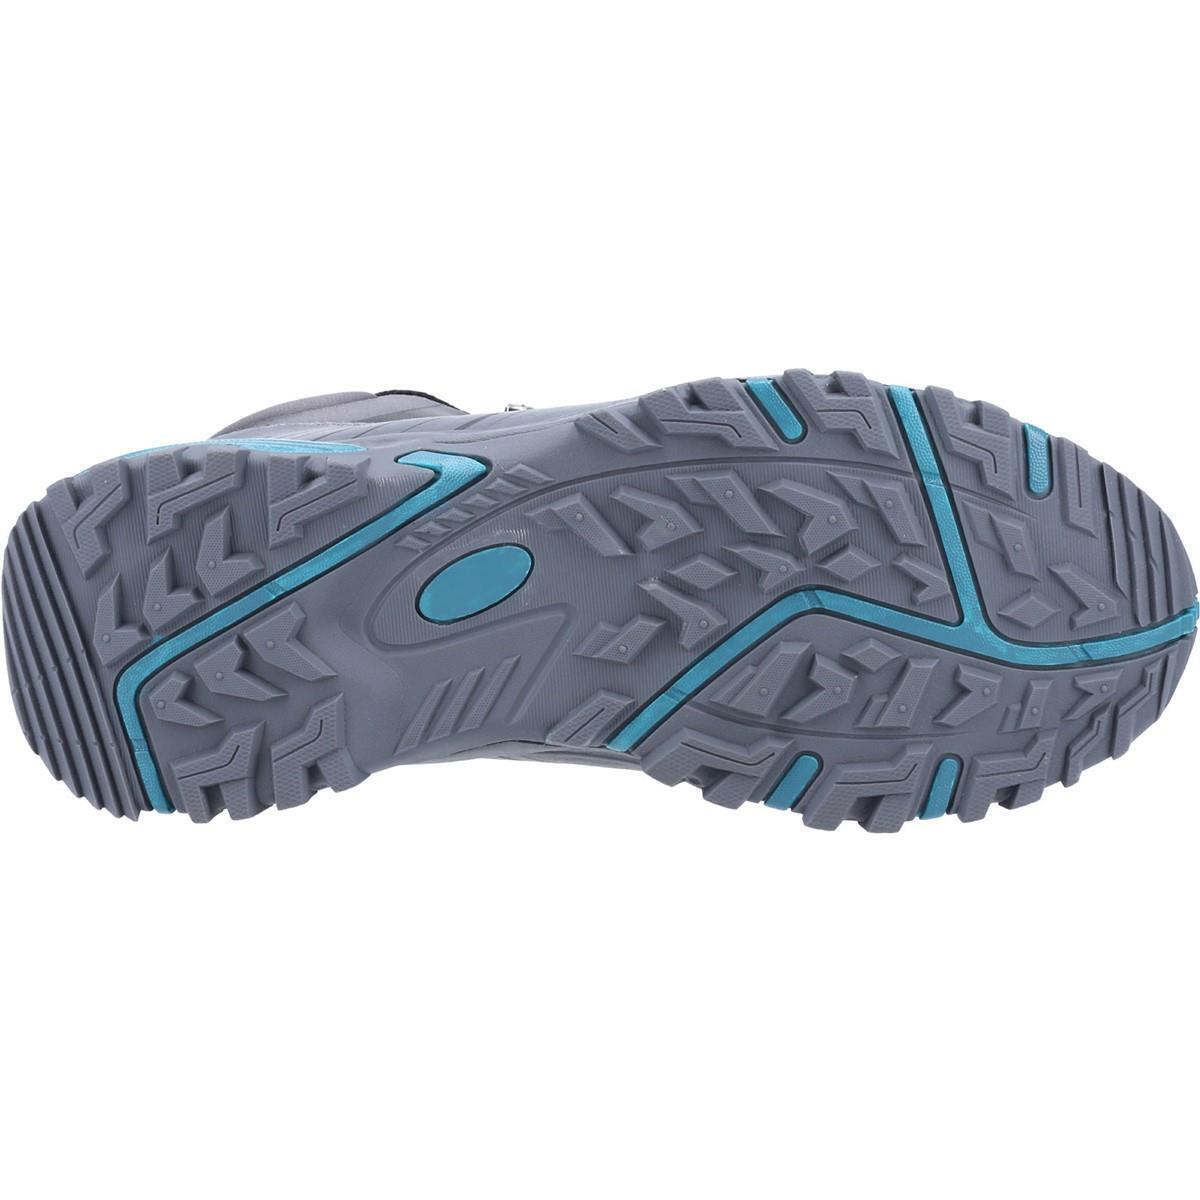 Womens/Ladies Wychwood Hiking Boots (Grey/Blue) 4/5